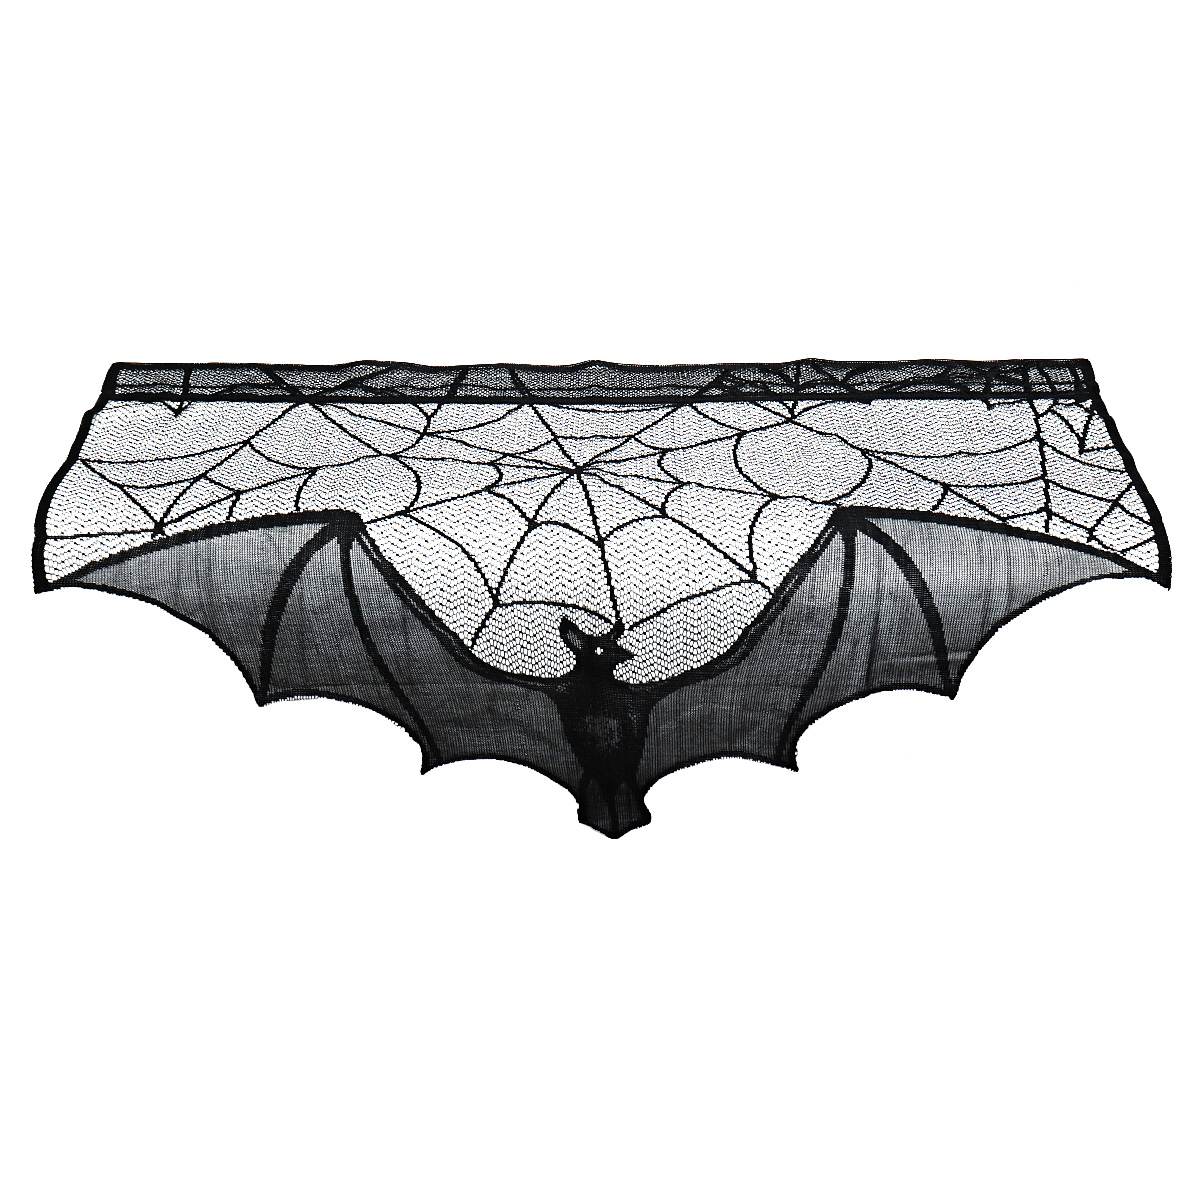 150 Cm Harige Giant Spider Halloween Prop Spookhuis Decor Enorme Spider Web Bat Party Diy Decoratie: Spider web